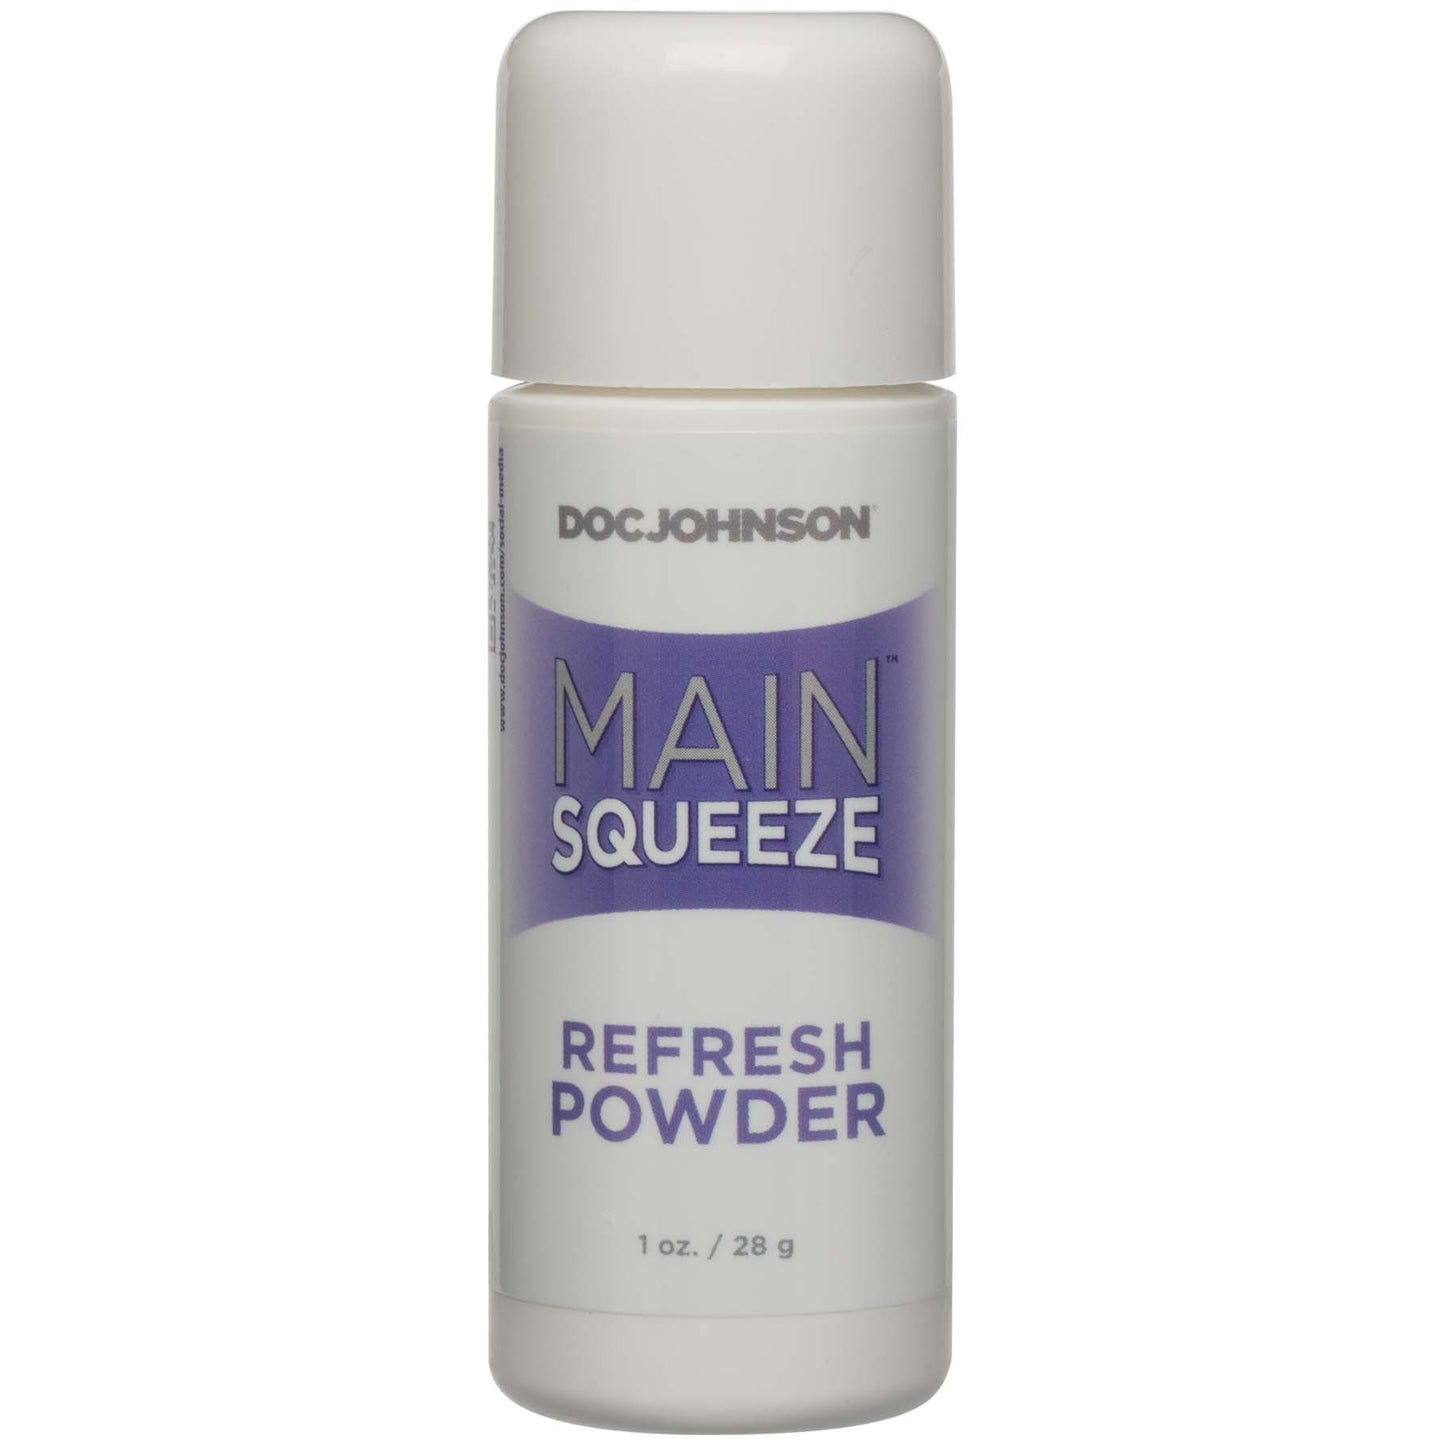 Main Squeeze - Refresh Powder